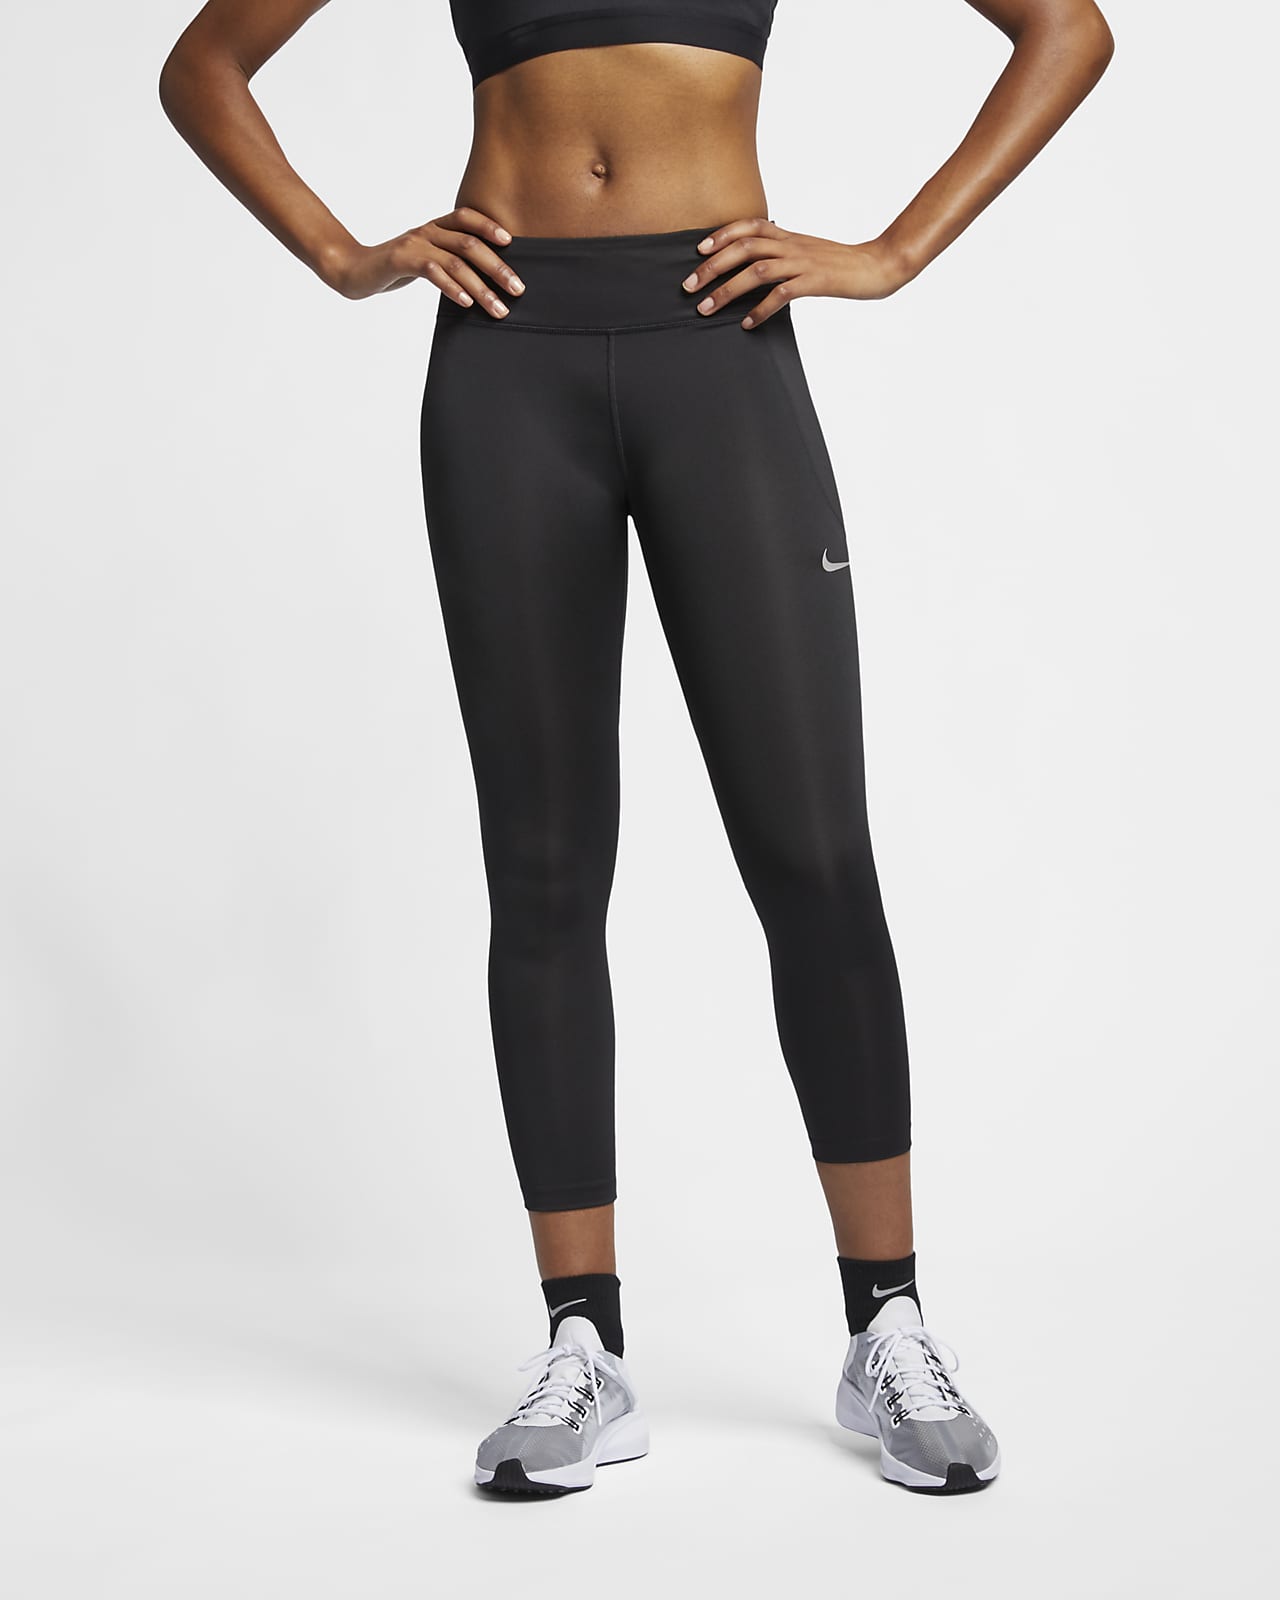 Recepción tornillo promesa Nike Fast Women's Mid-Rise Crop Running Leggings. Nike LU